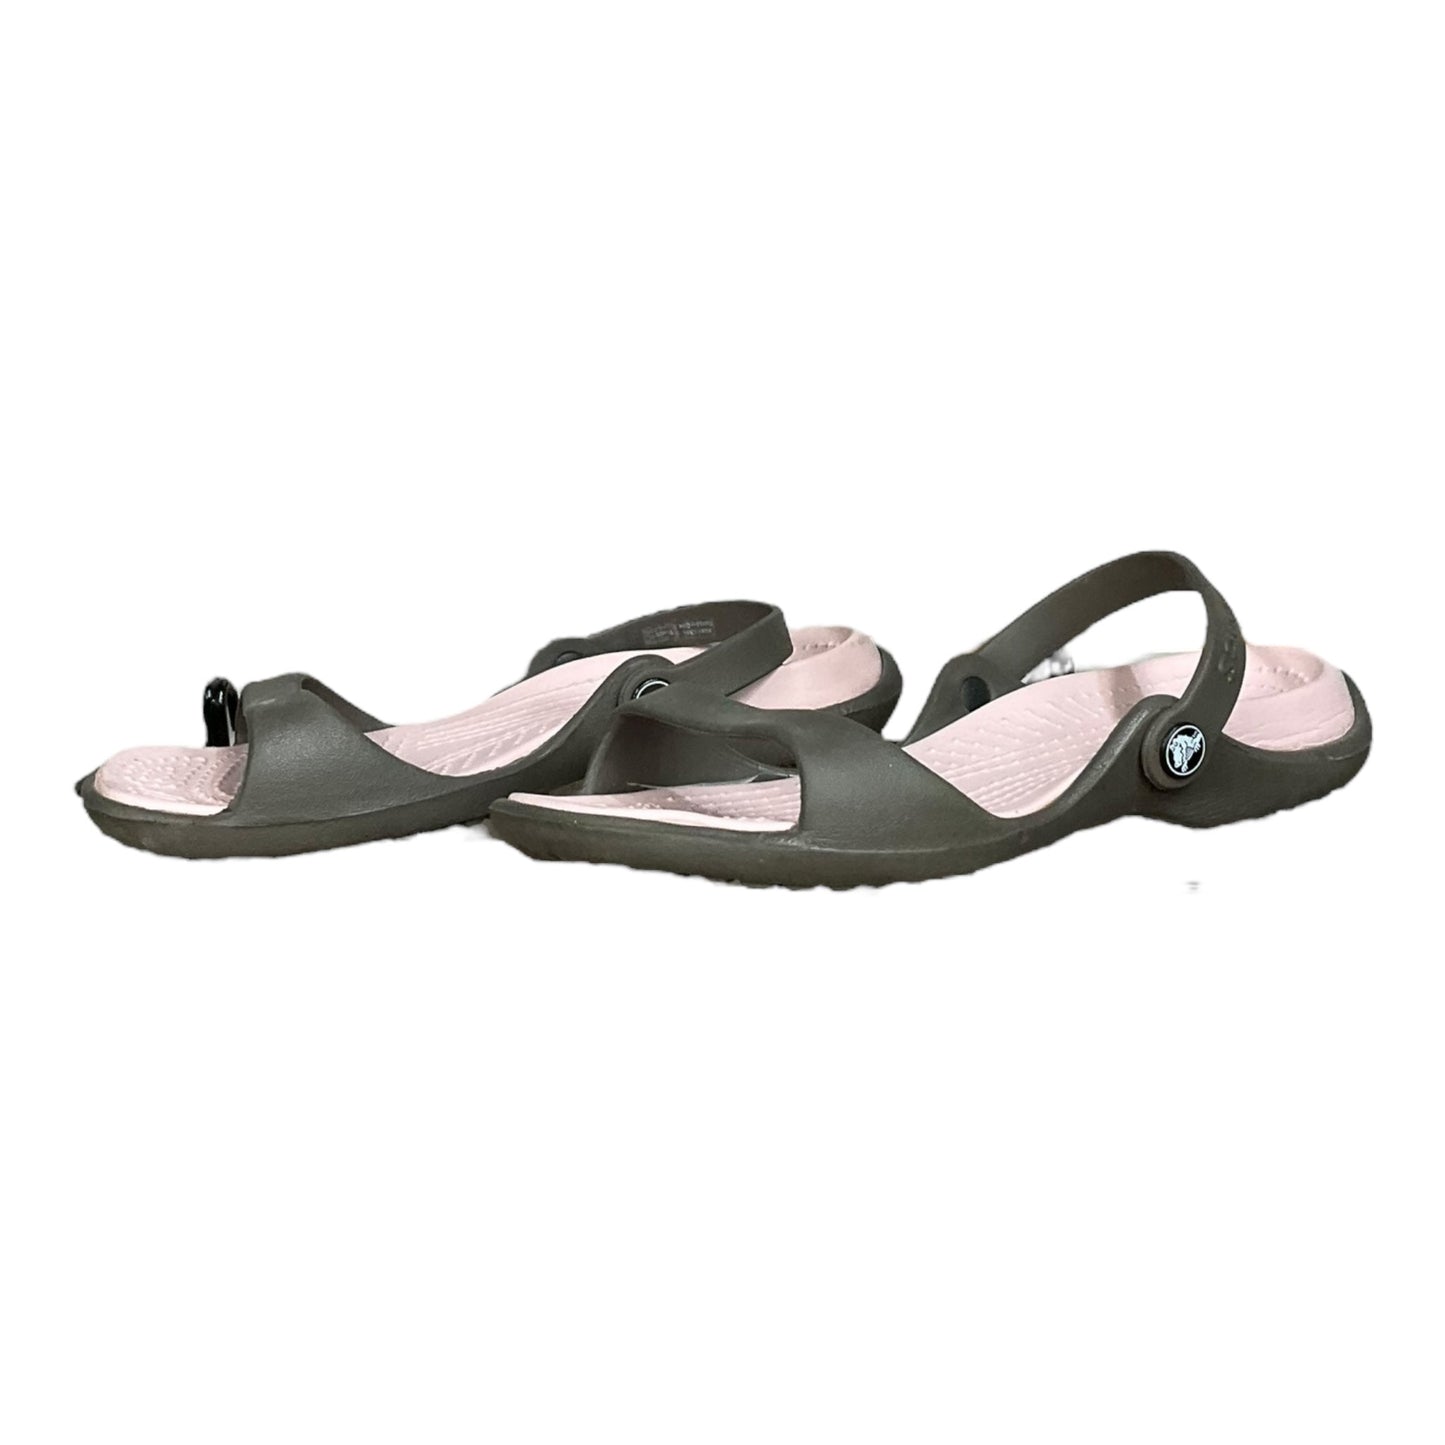 Grey Shoes Flats Crocs, Size 9